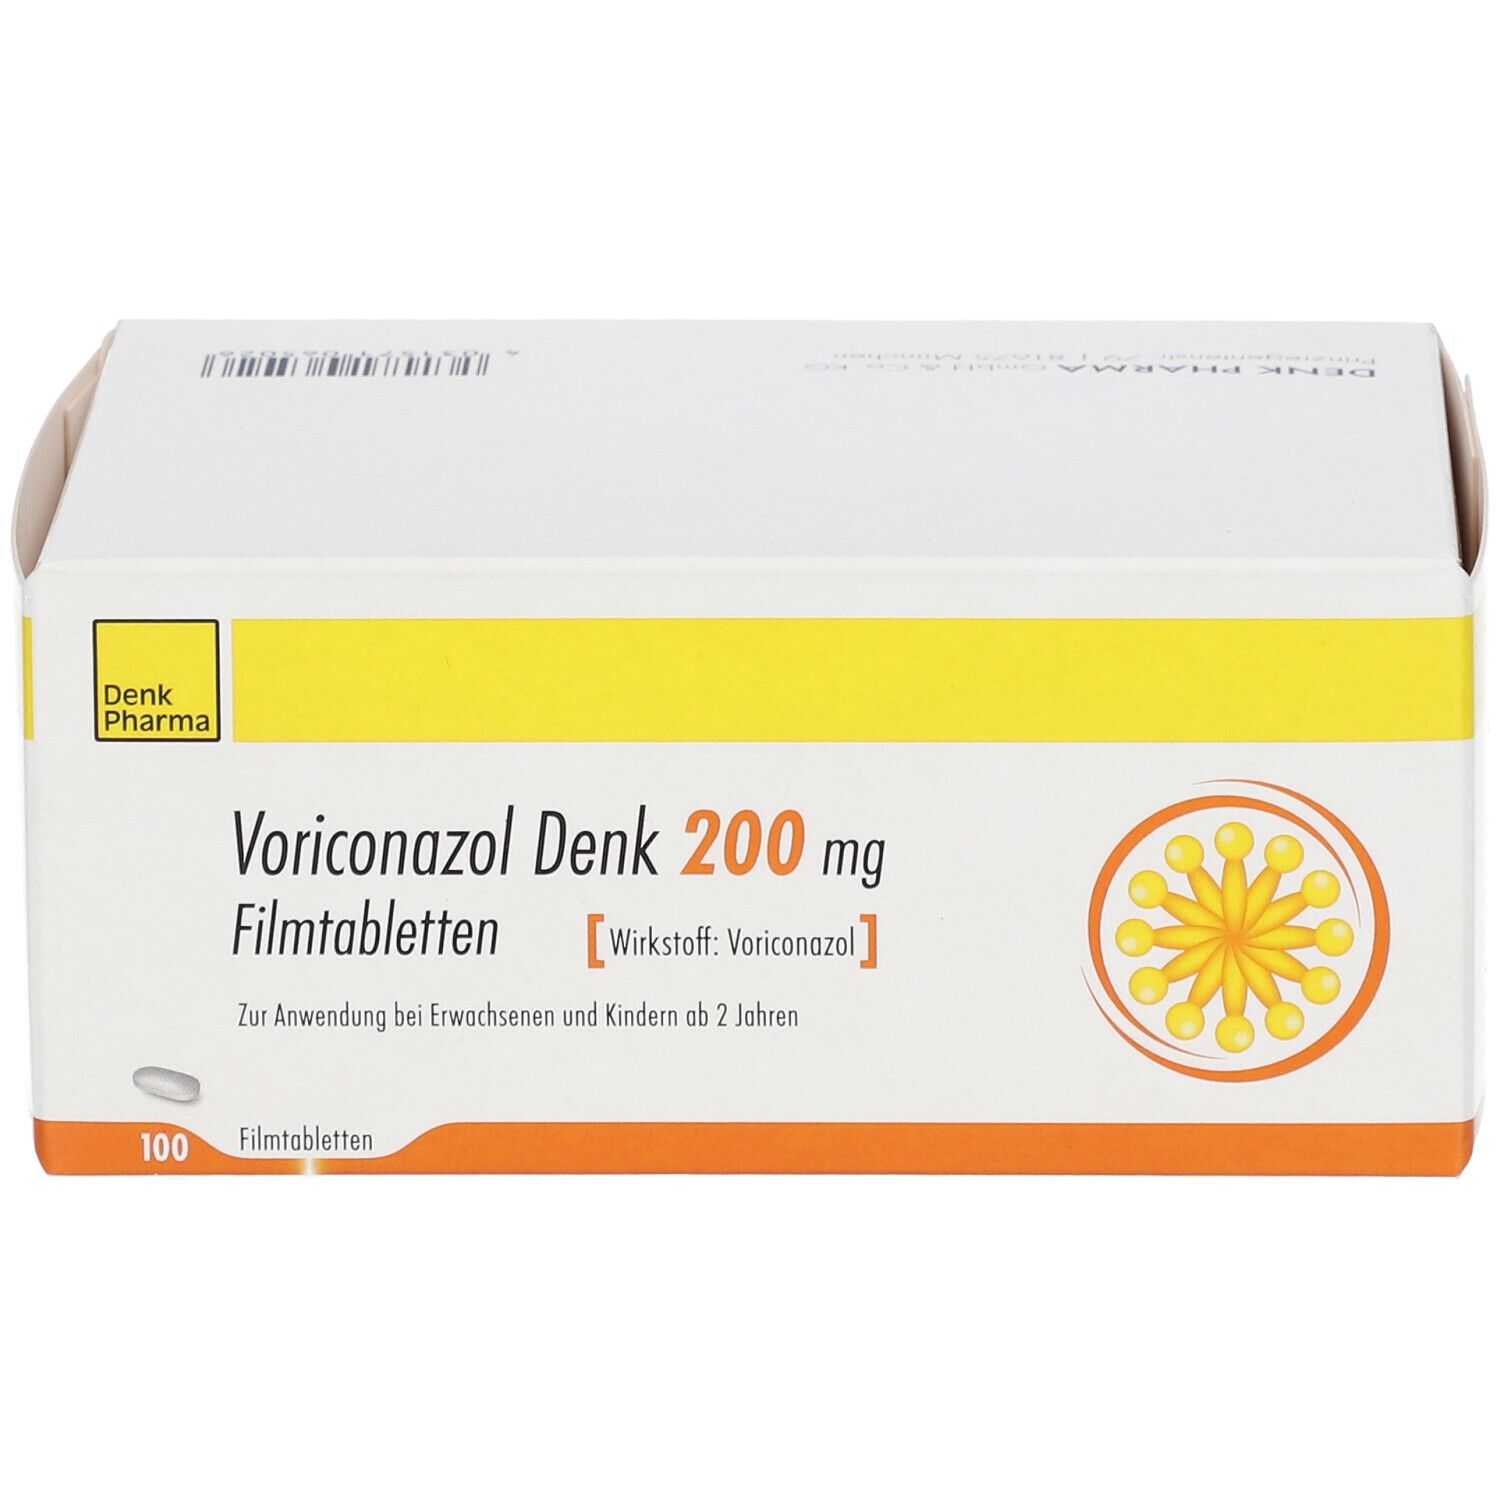 Voriconazol Denk 200 mg